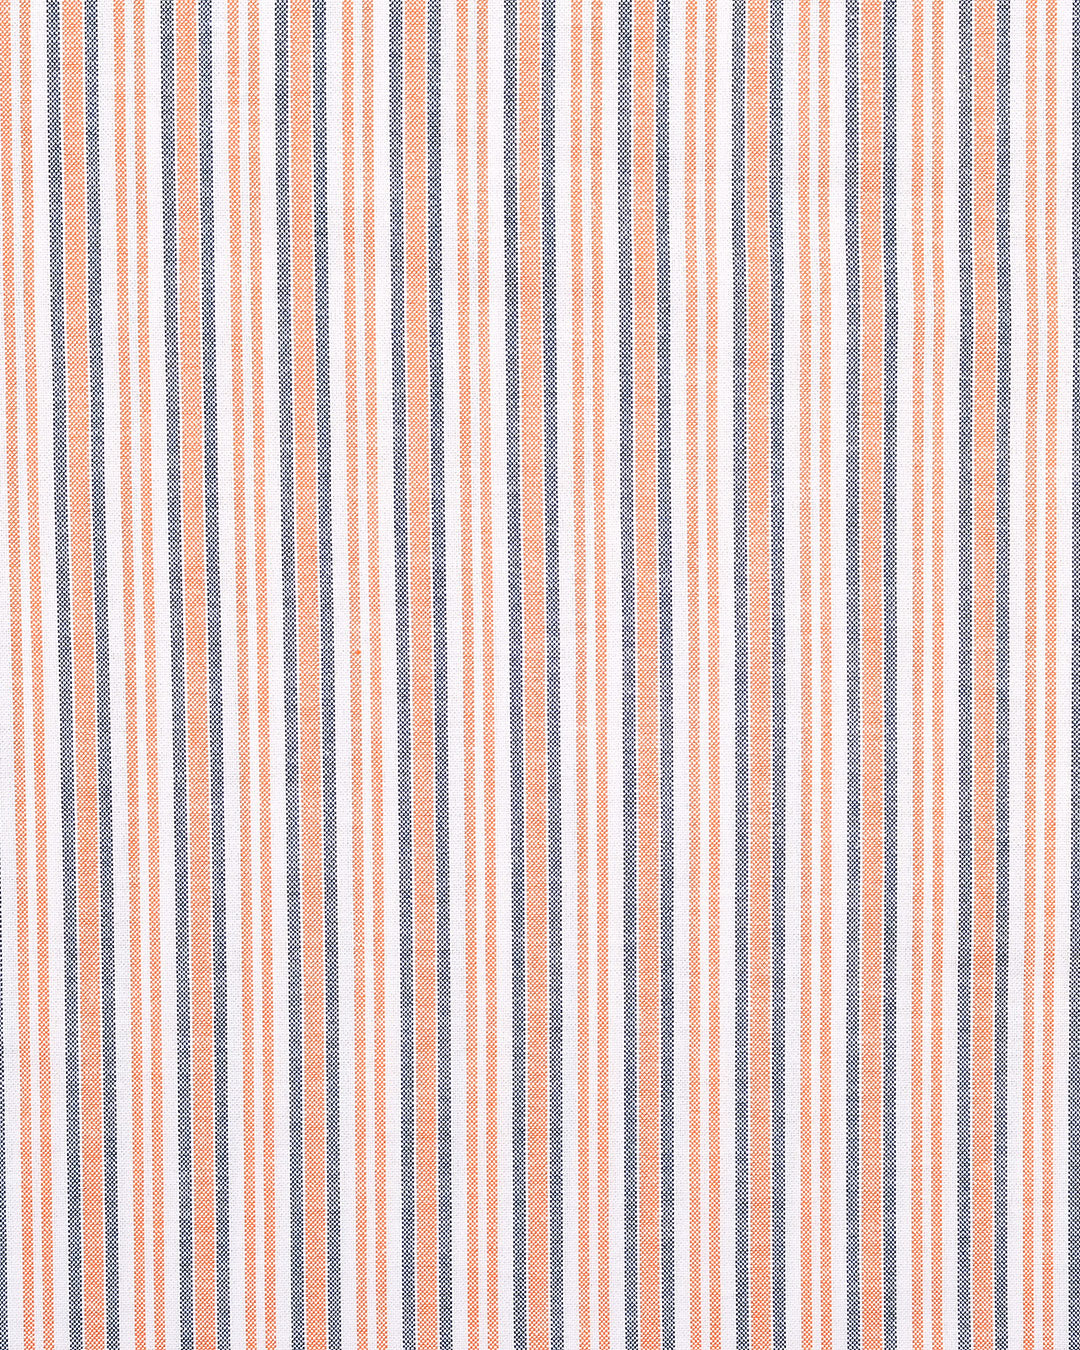 Oxford: Shades of Orange Stripes